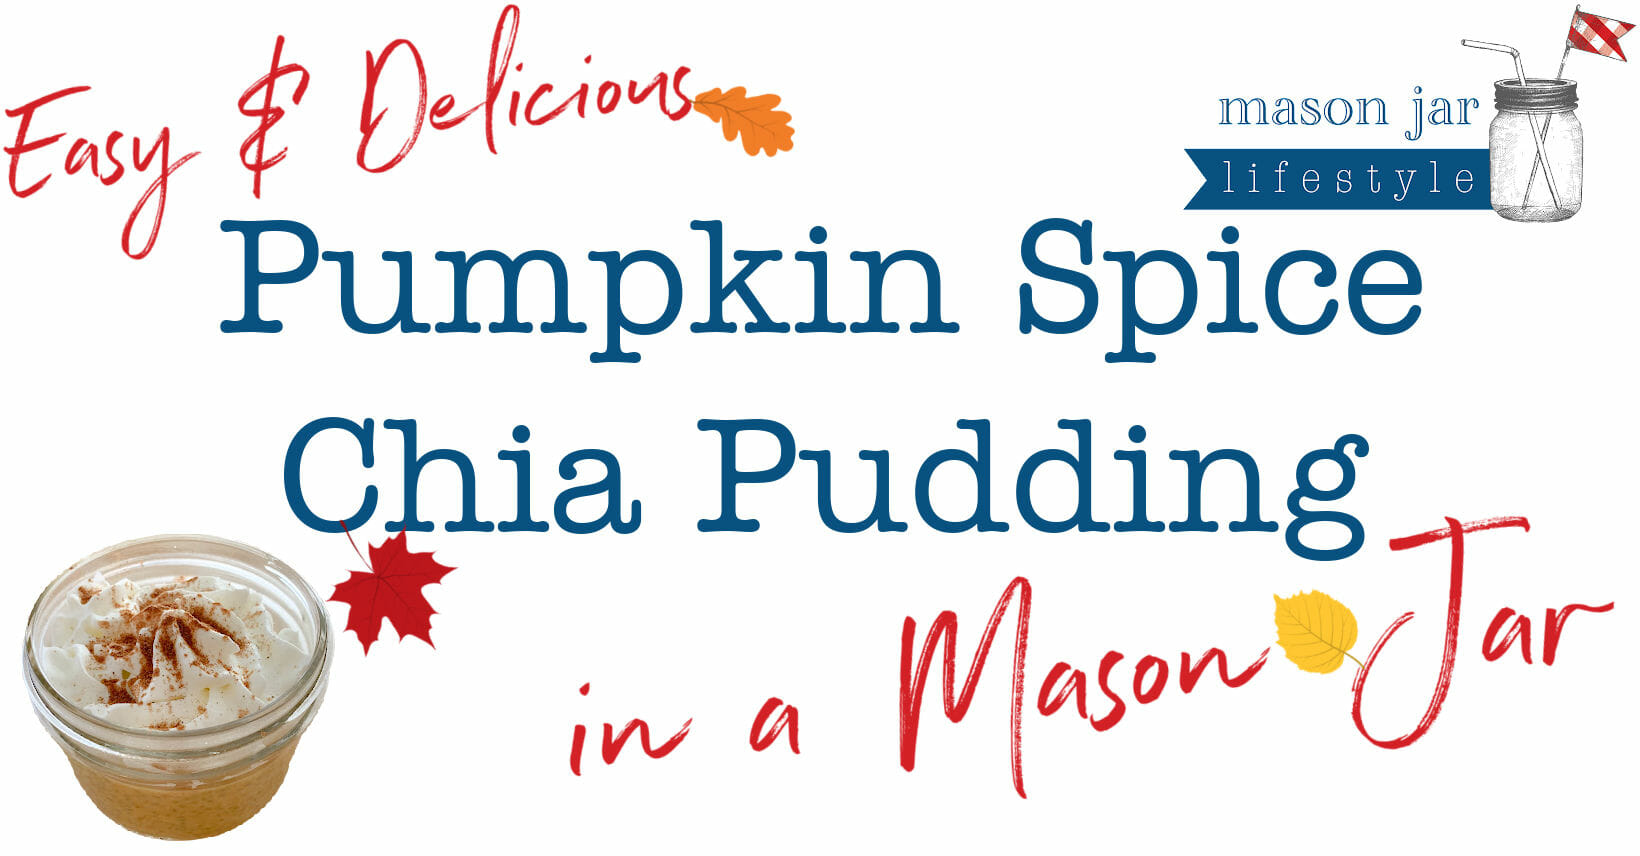 Mason Jar Lifestyle Pumpkin Spice Latte Chia Seed Pudding healthy easy delicious fall autumn recipe blog post 2022 banner